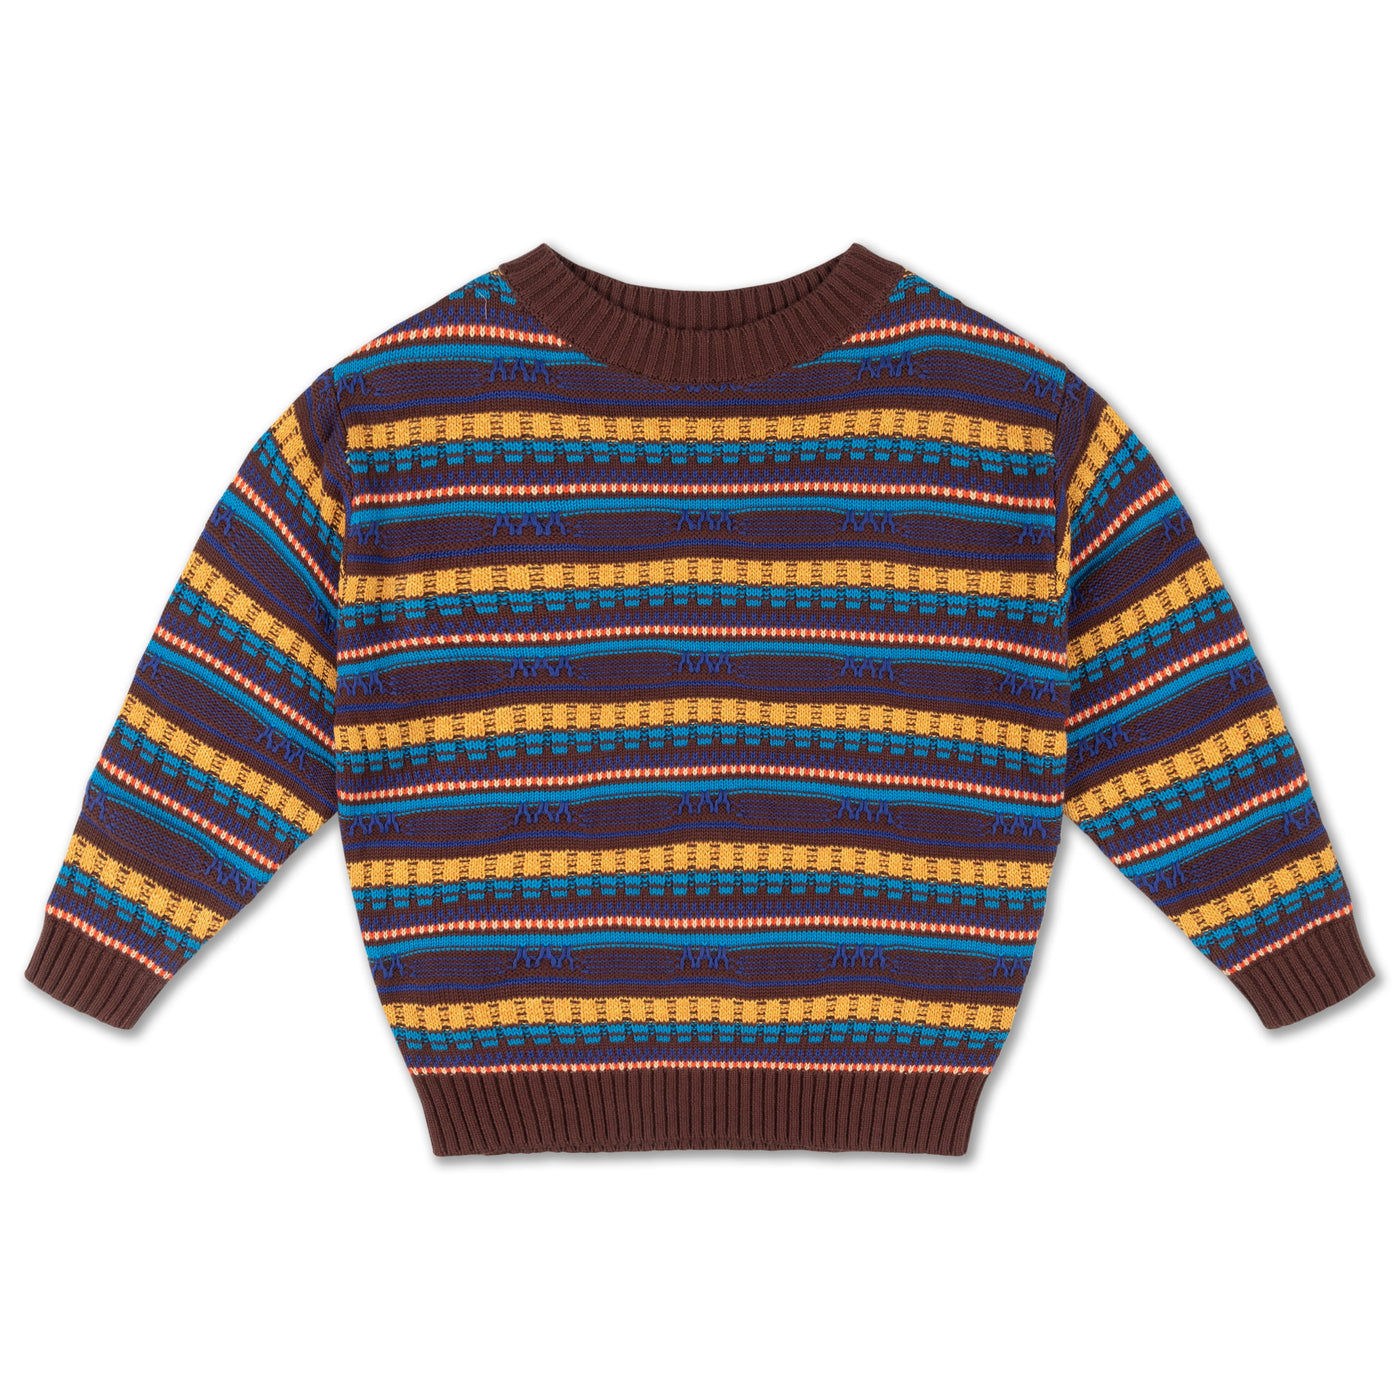 Repose AMS - Knit Jacquard Sweater 2y & 12y